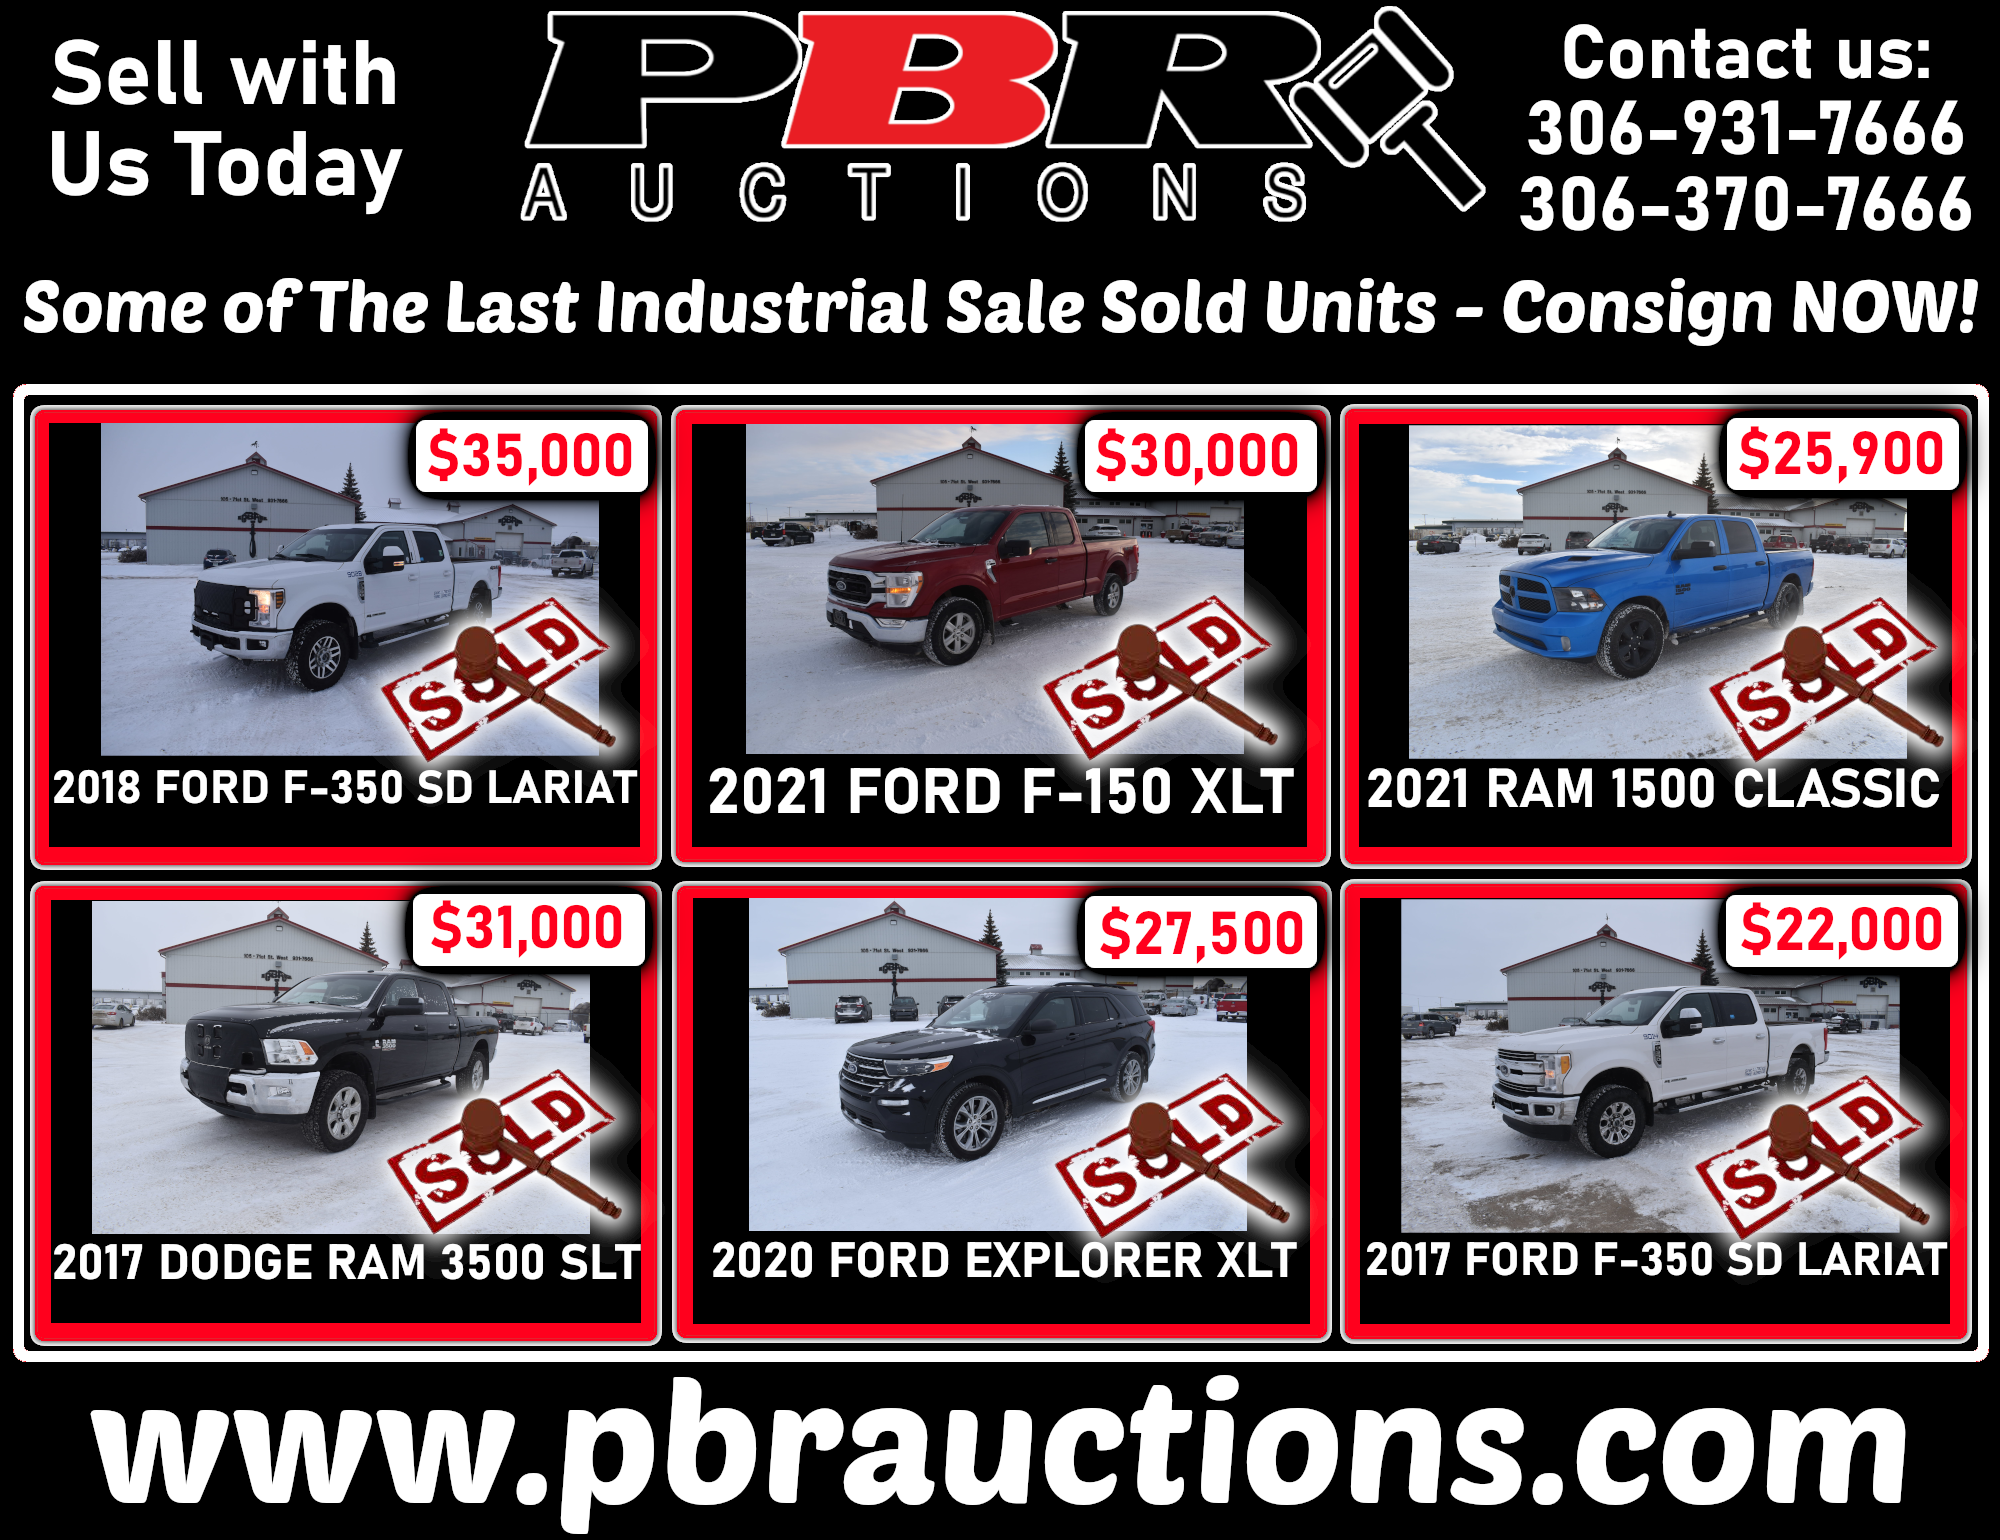 PBR Auctions